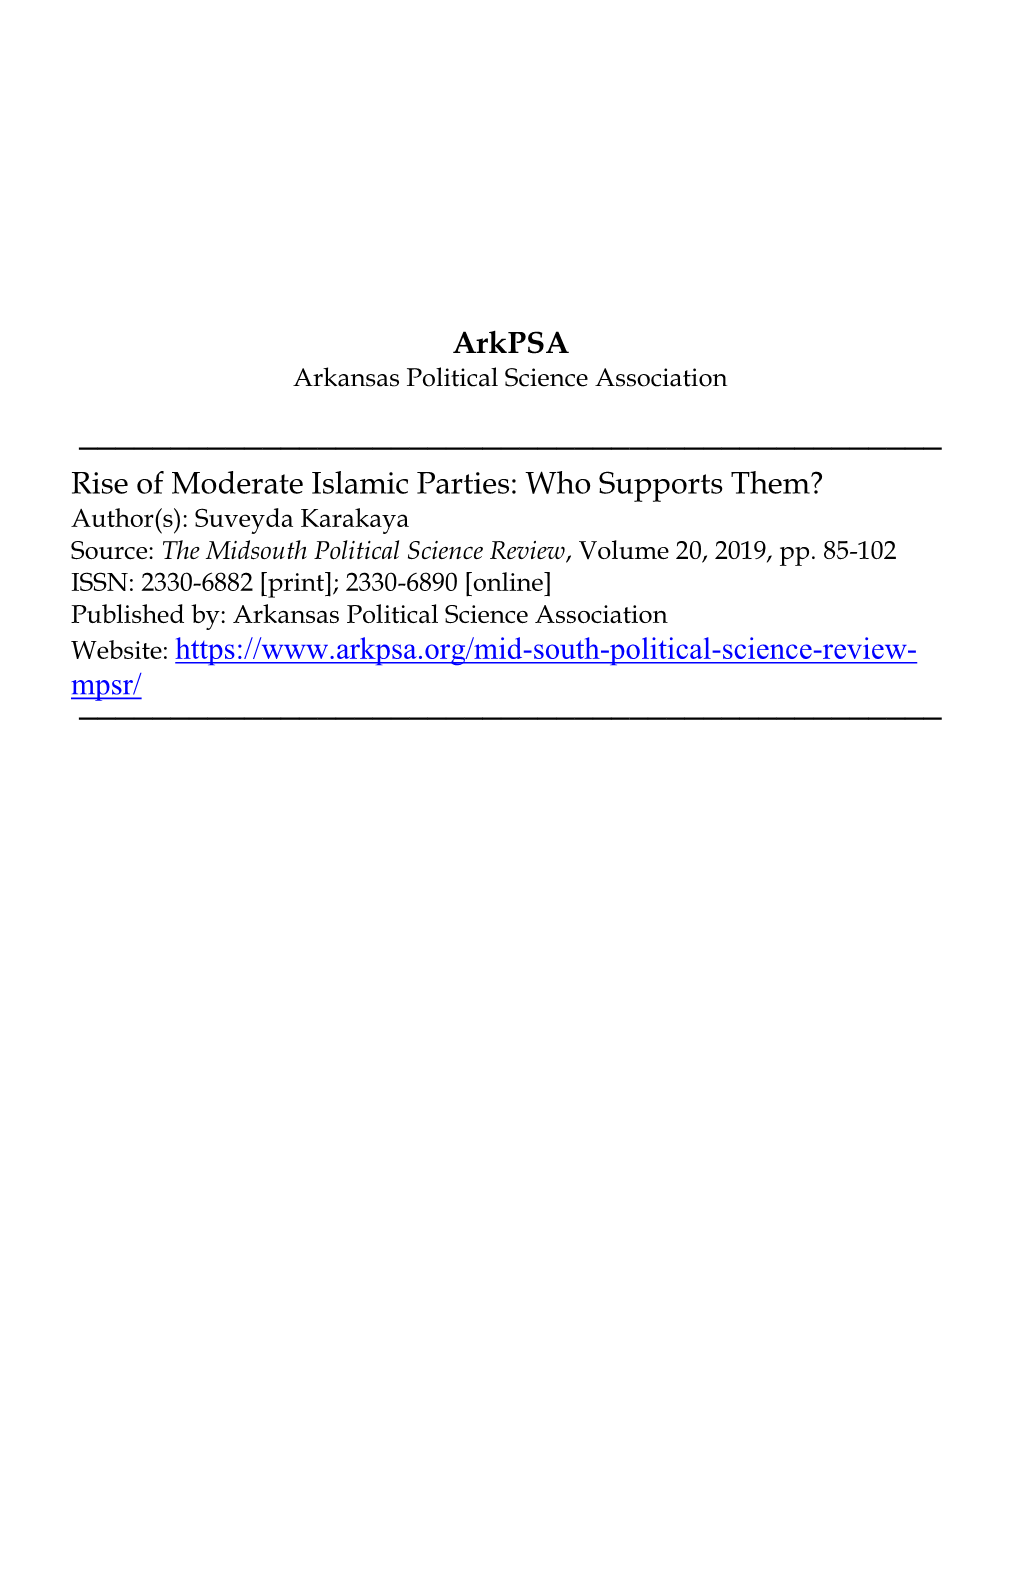 Suveyda Karakaya. “Rise of Moderate Islamic Parties: Who Supports